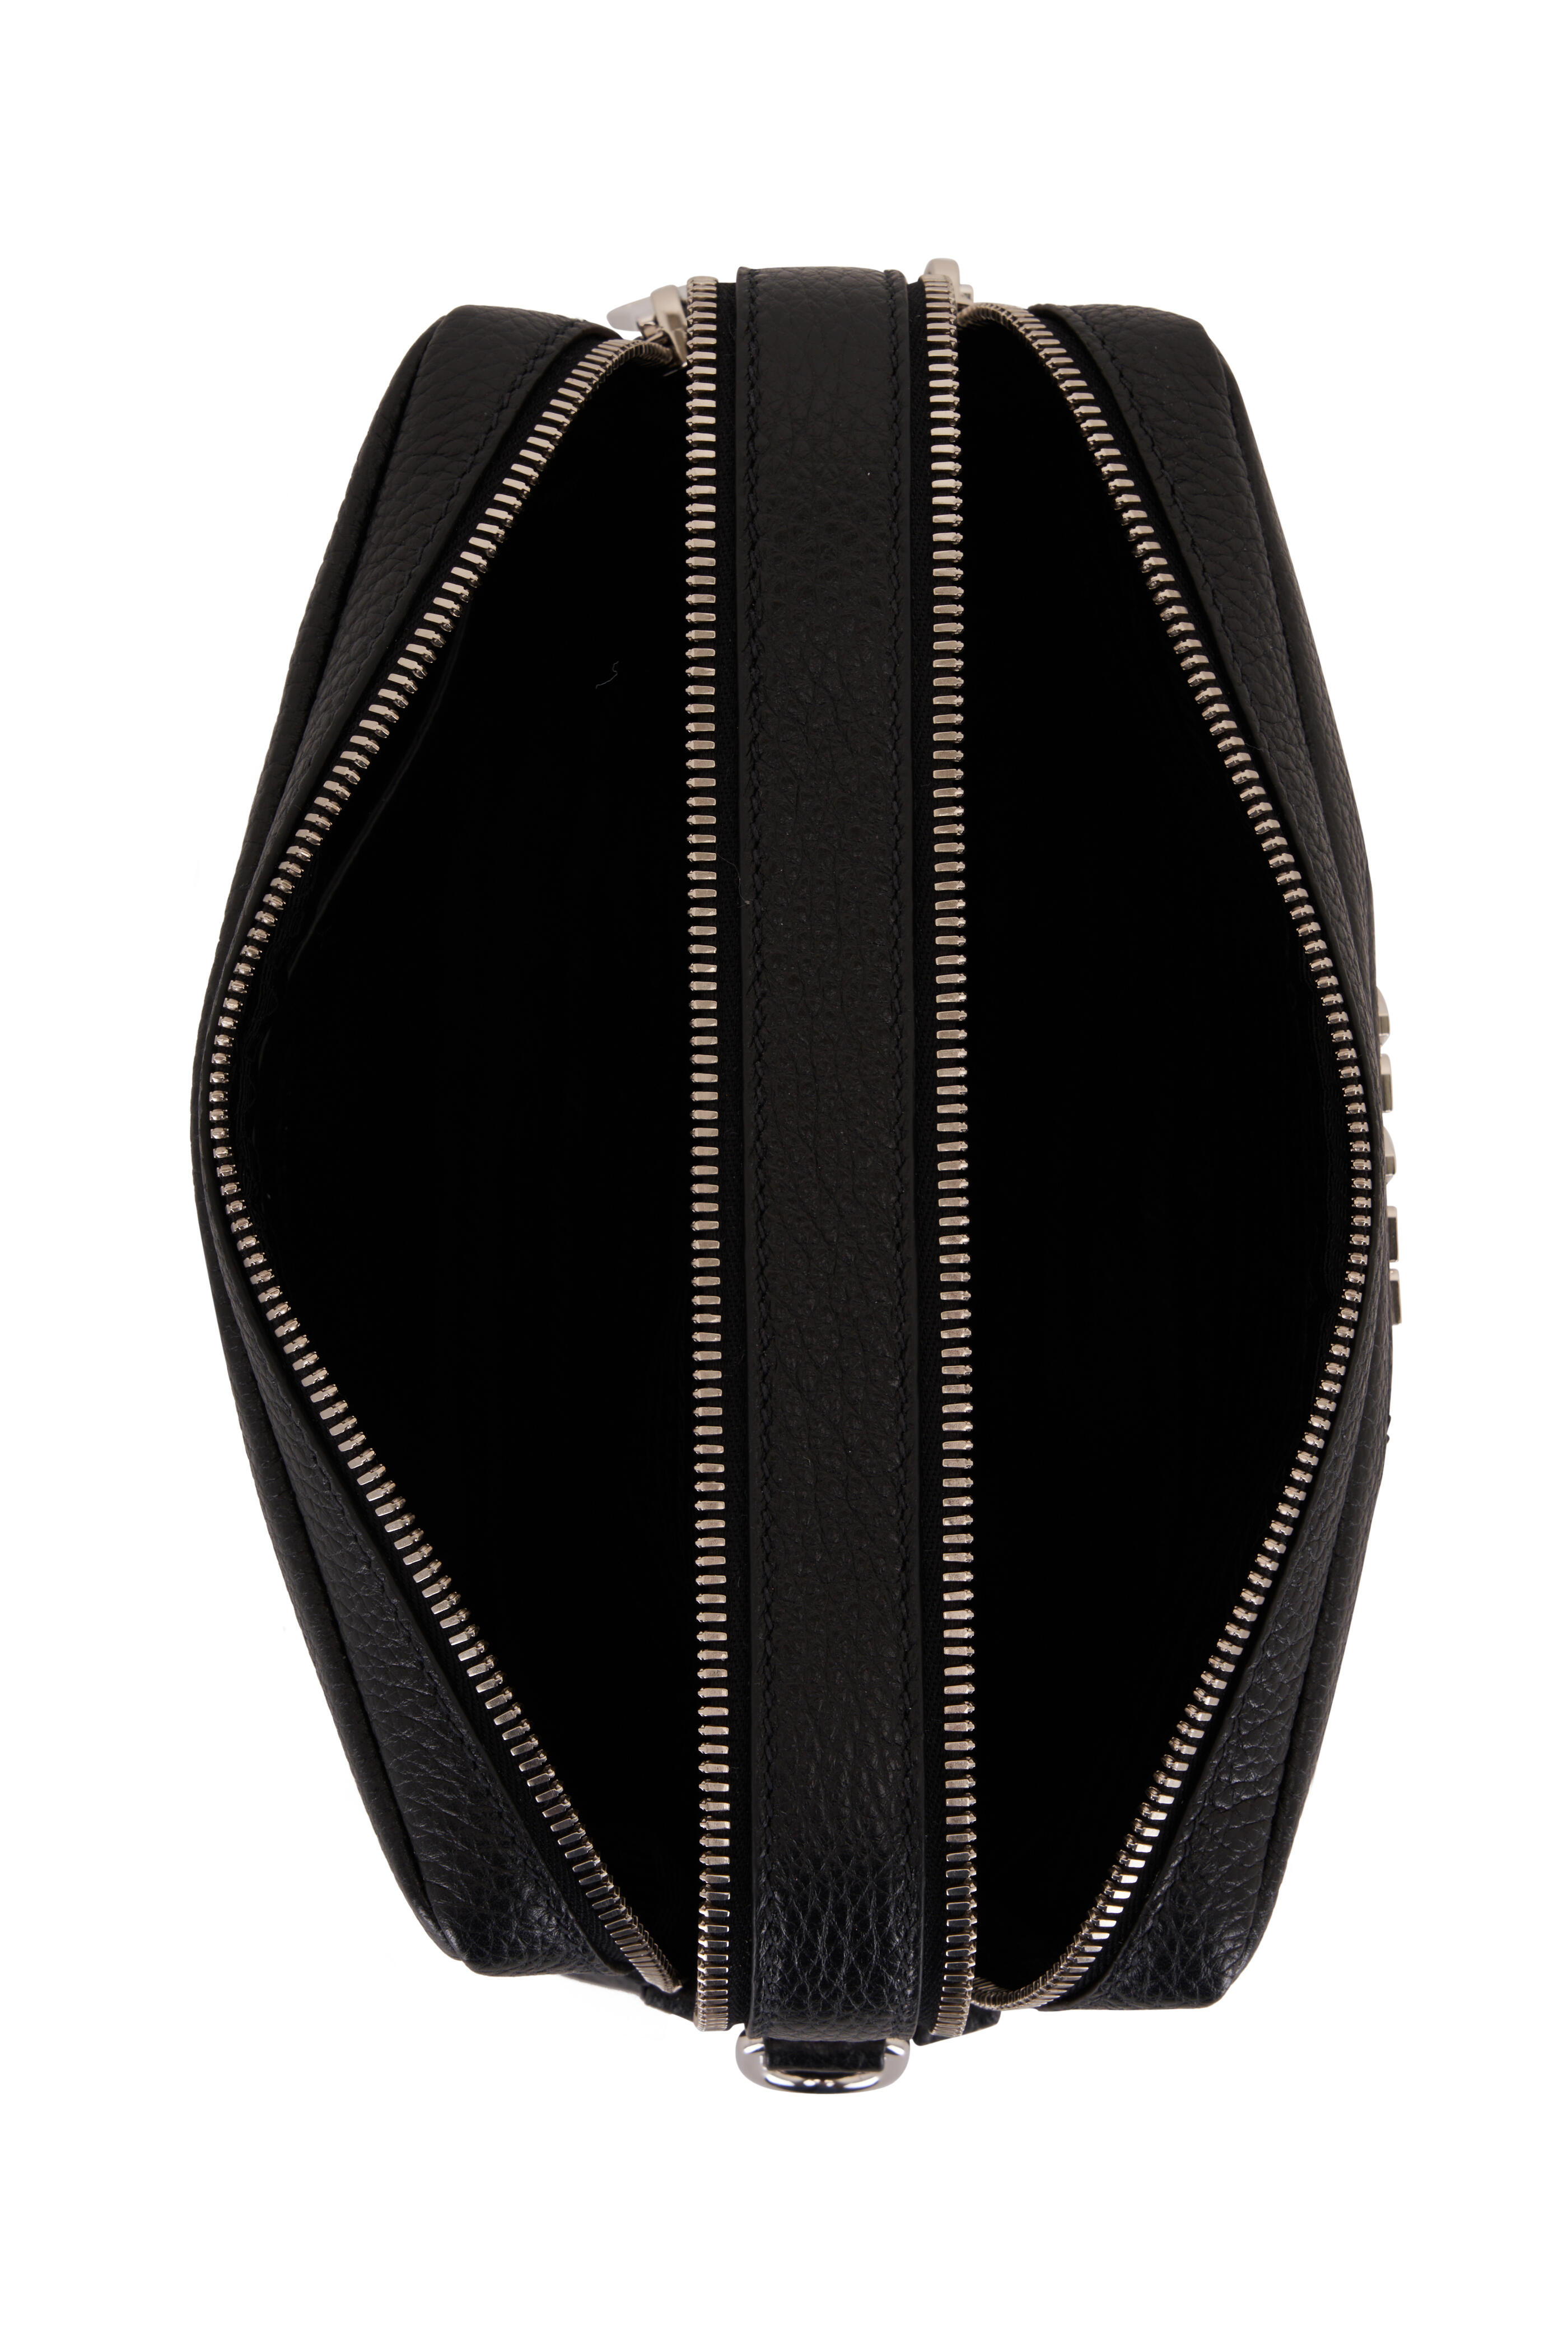 Prada Black Nylon Dual-Compartment Crossbody Bag, Best Price and Reviews